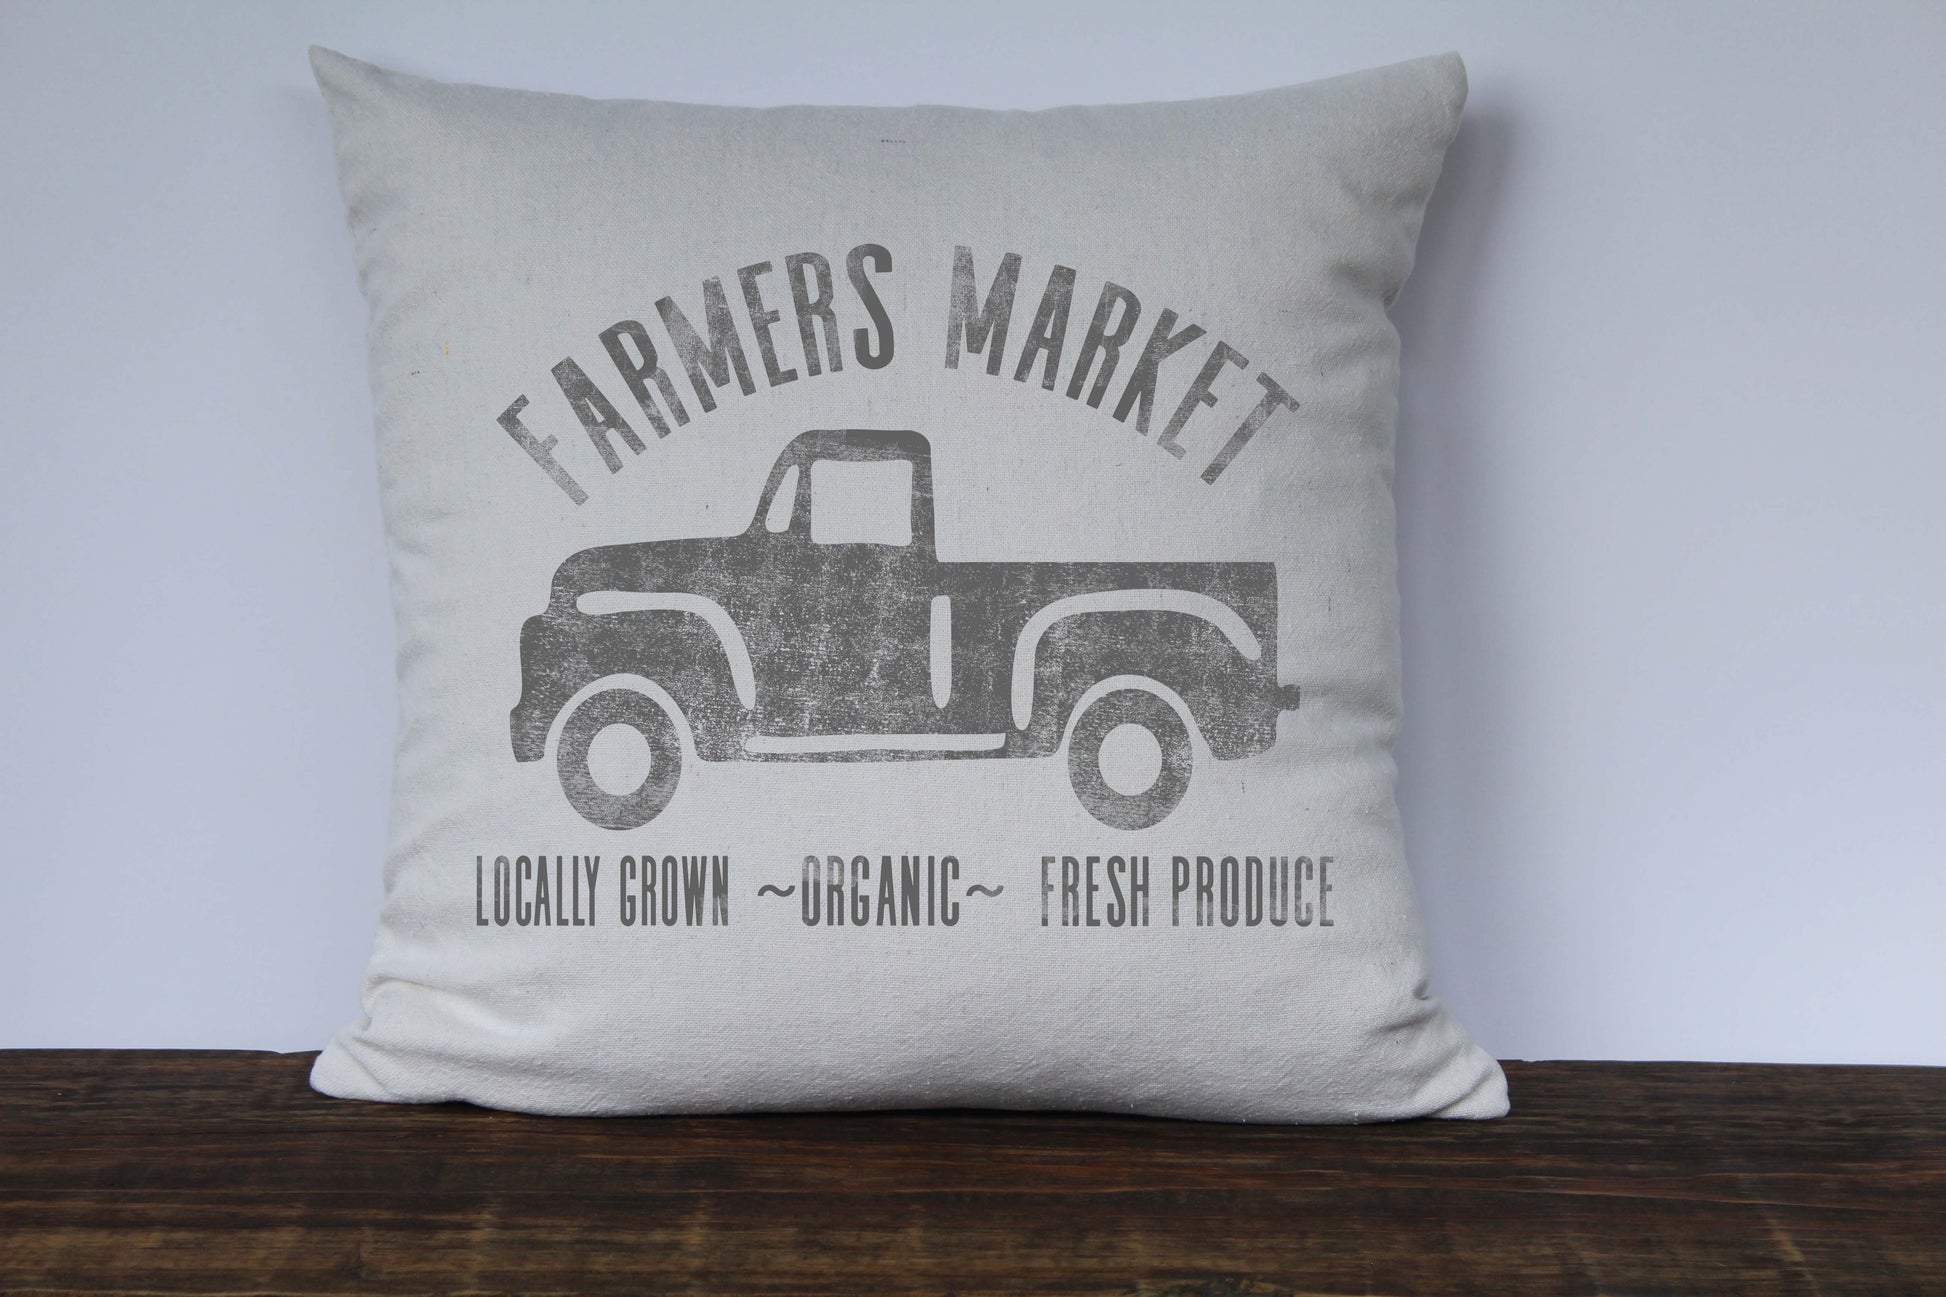 Farmers Market Vintage Truck Pillow Cover - Returning Grace Designs